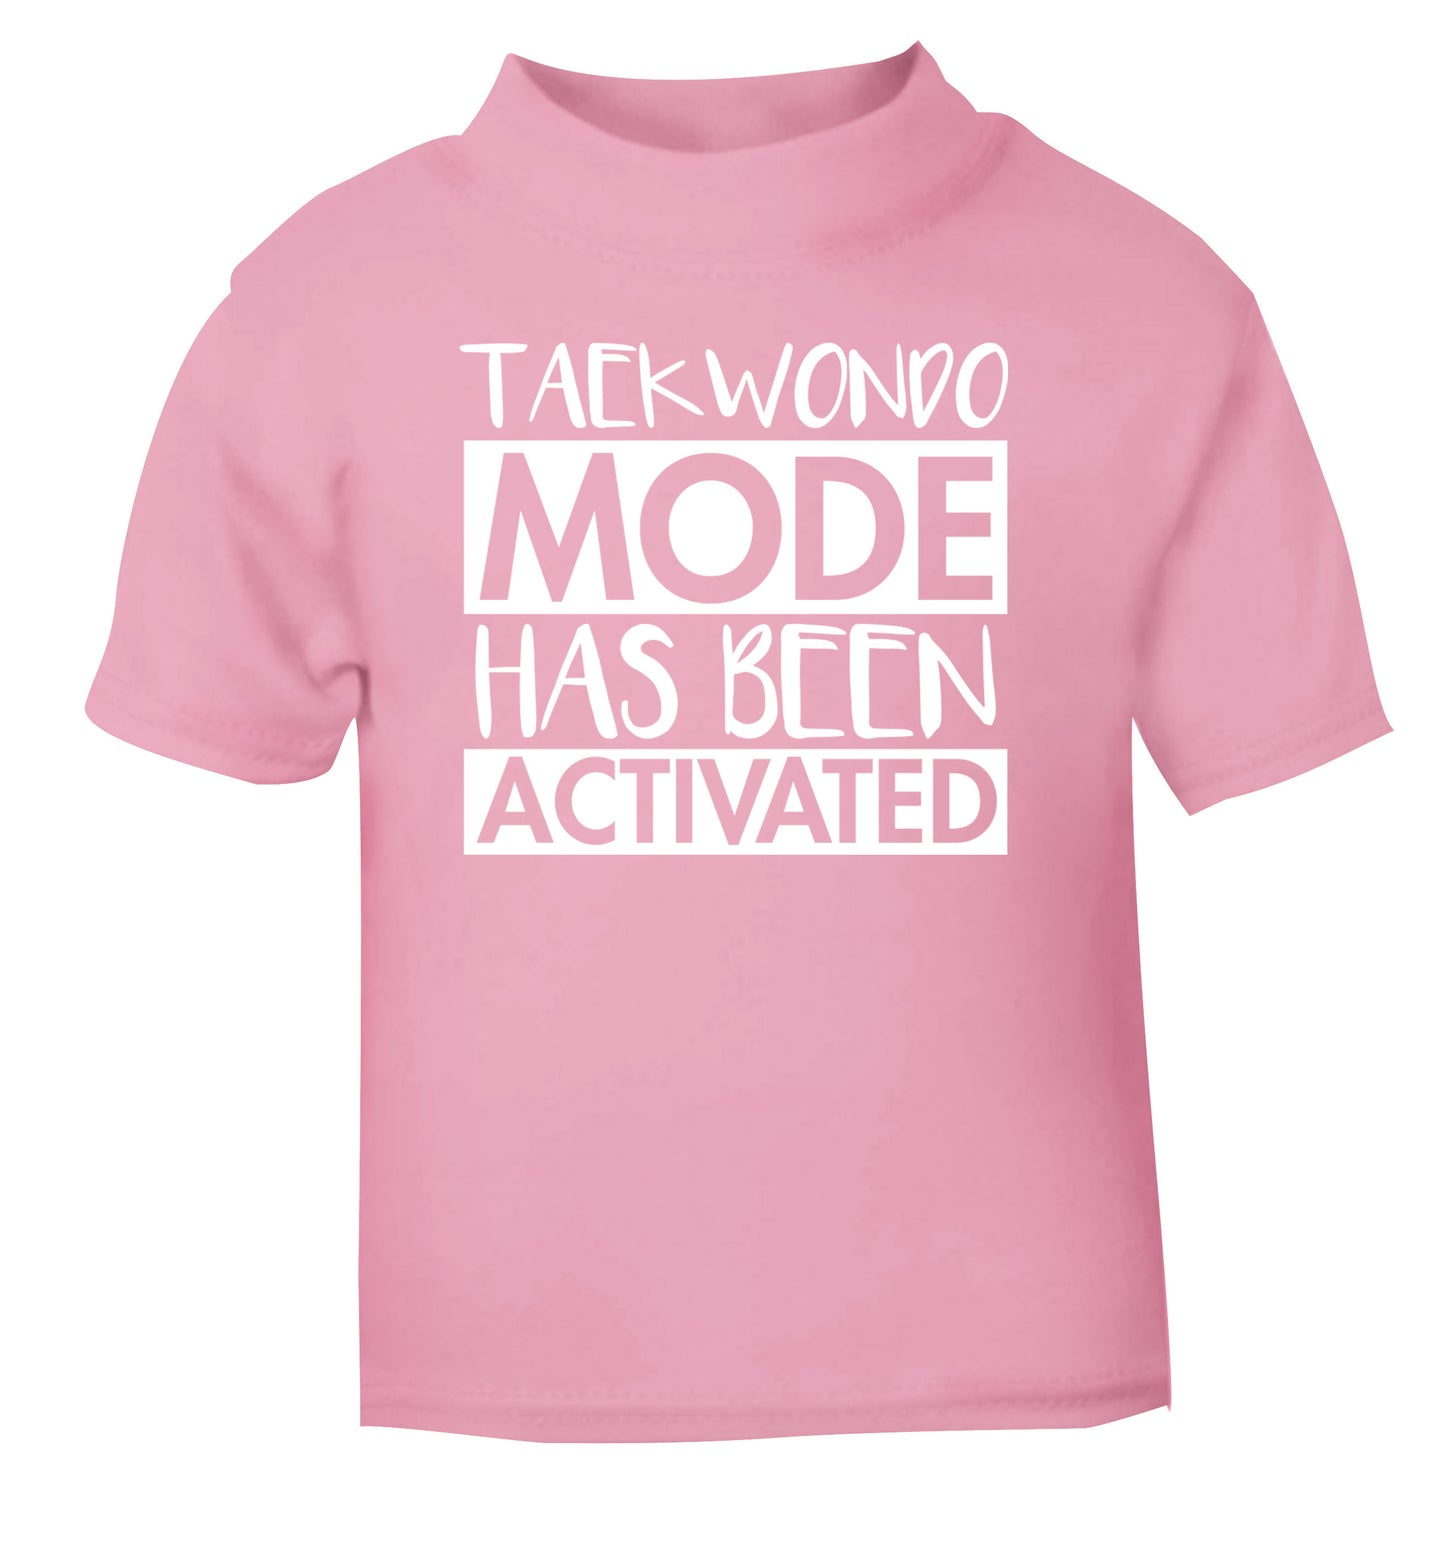 Taekwondo mode activated light pink Baby Toddler Tshirt 2 Years